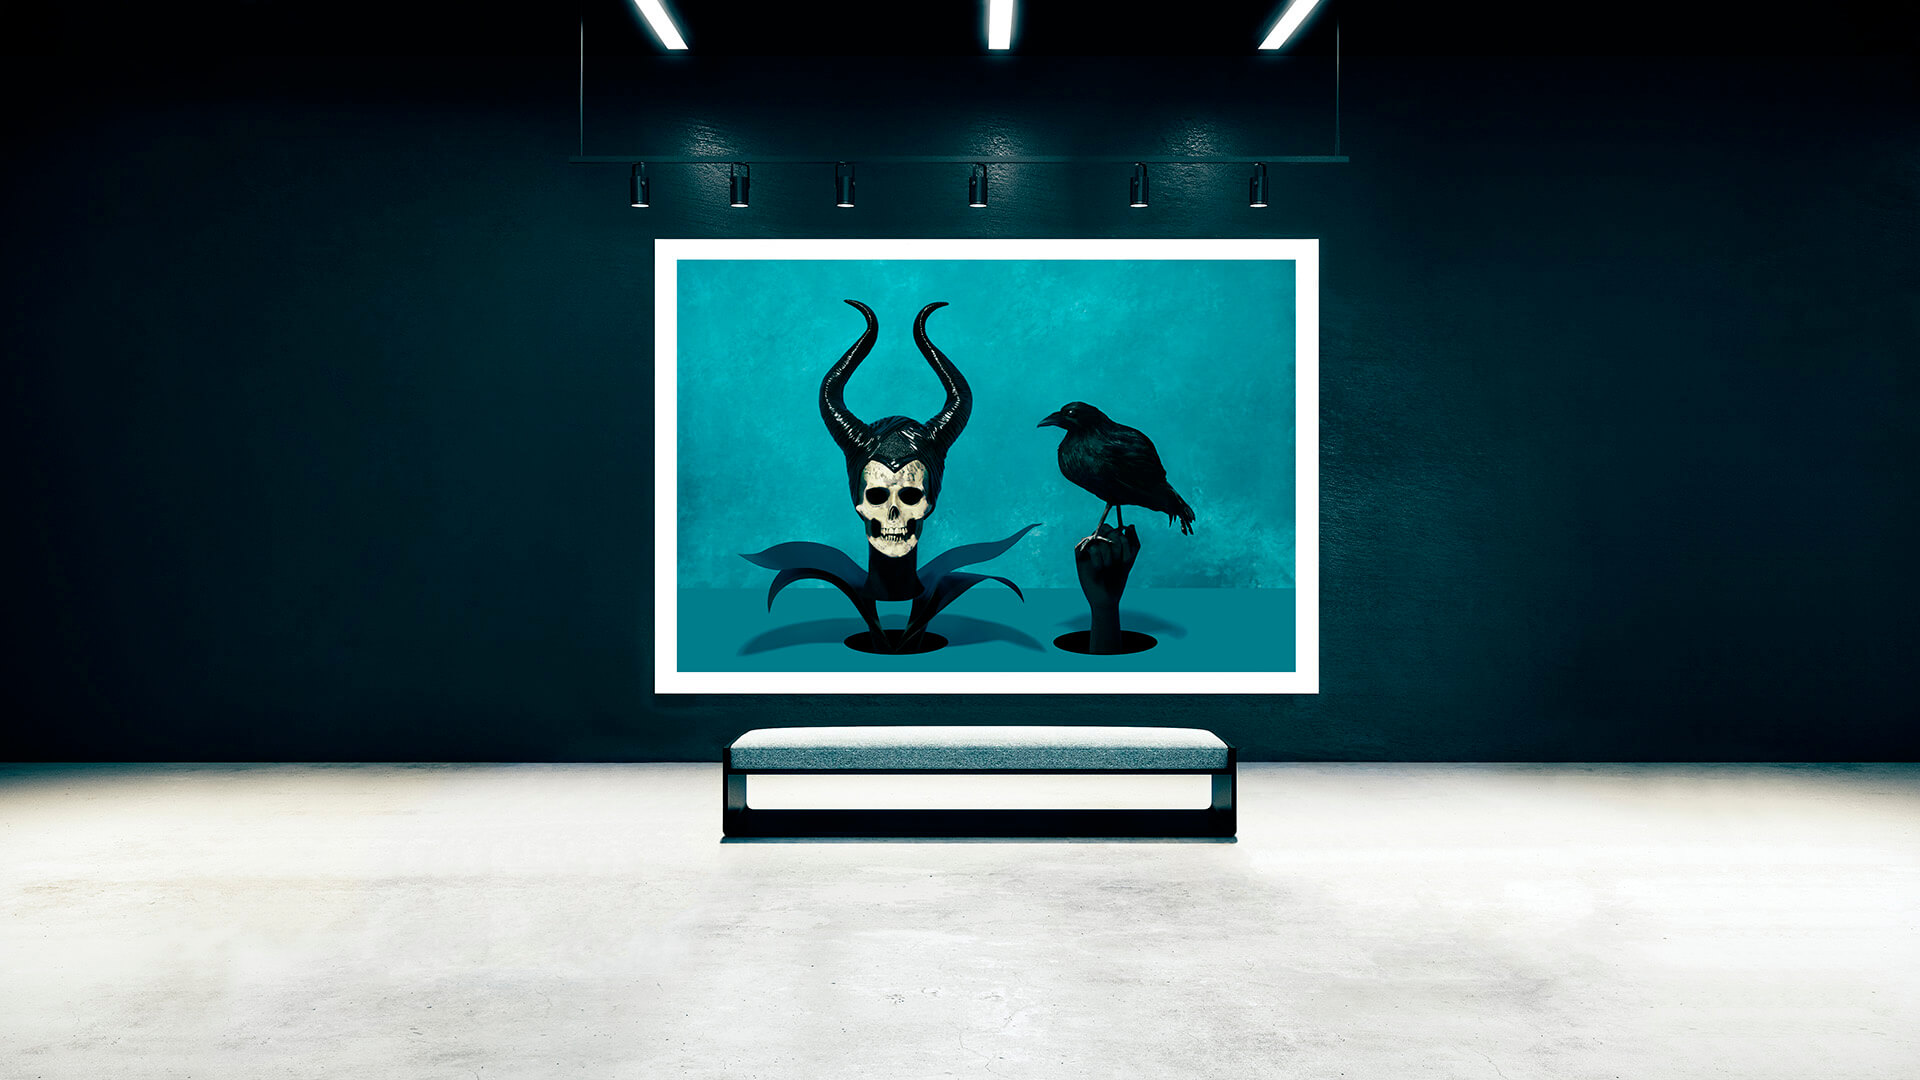 Sintora-Maleficent-Project-Memento-mori-Exhibition-Horno-Art-Gallery-1920x1080